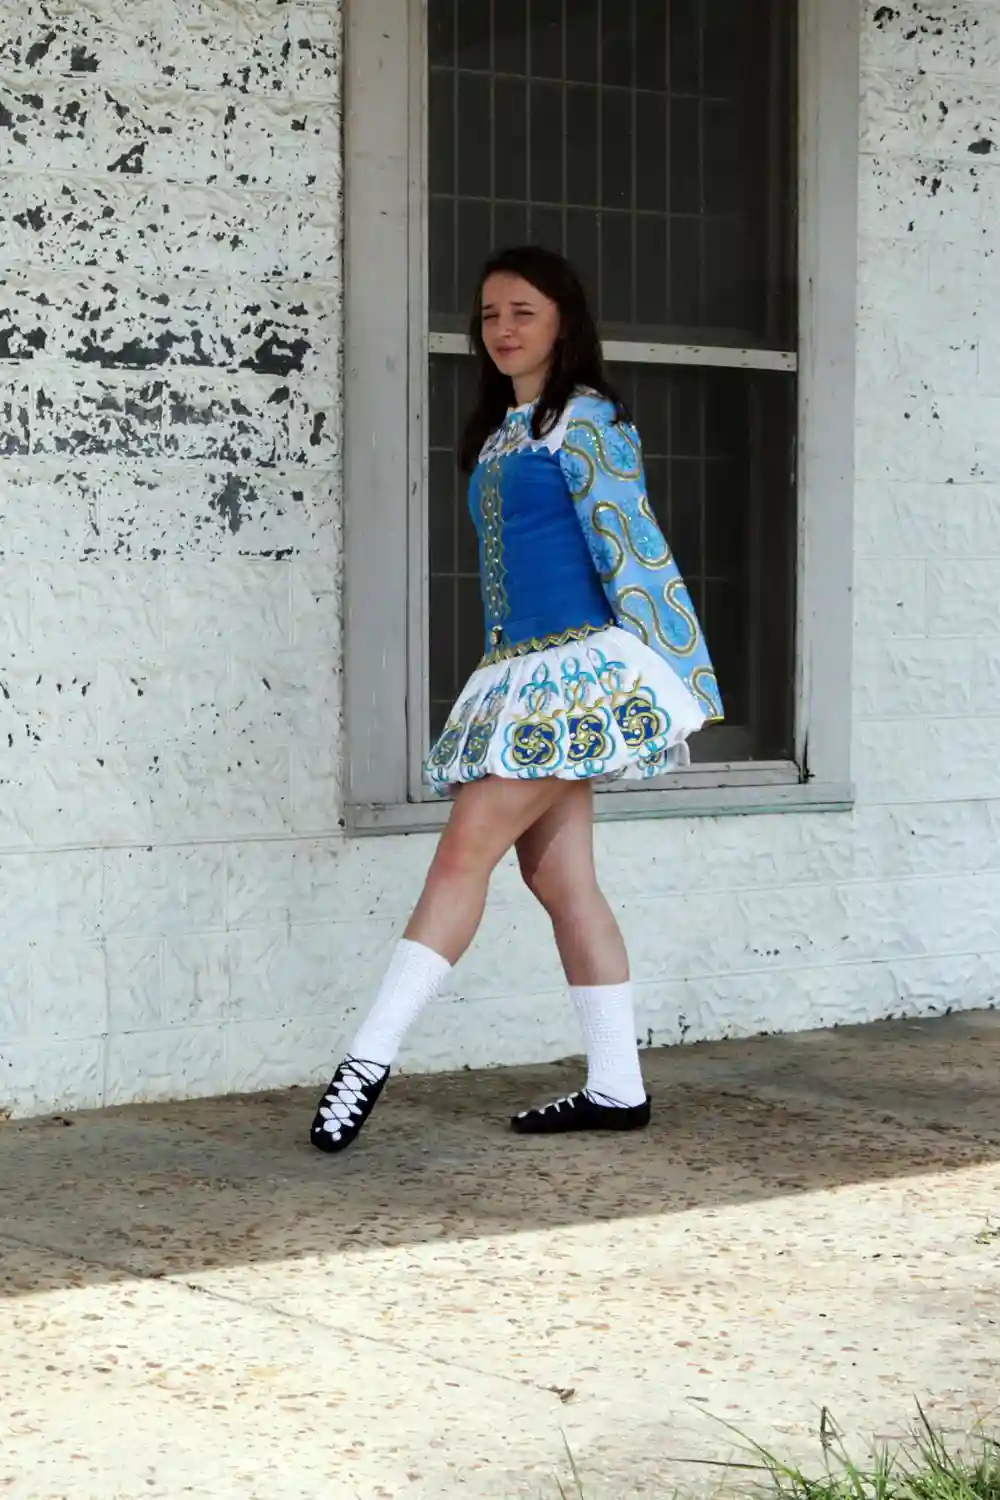 Irish Dancer wearing short dress